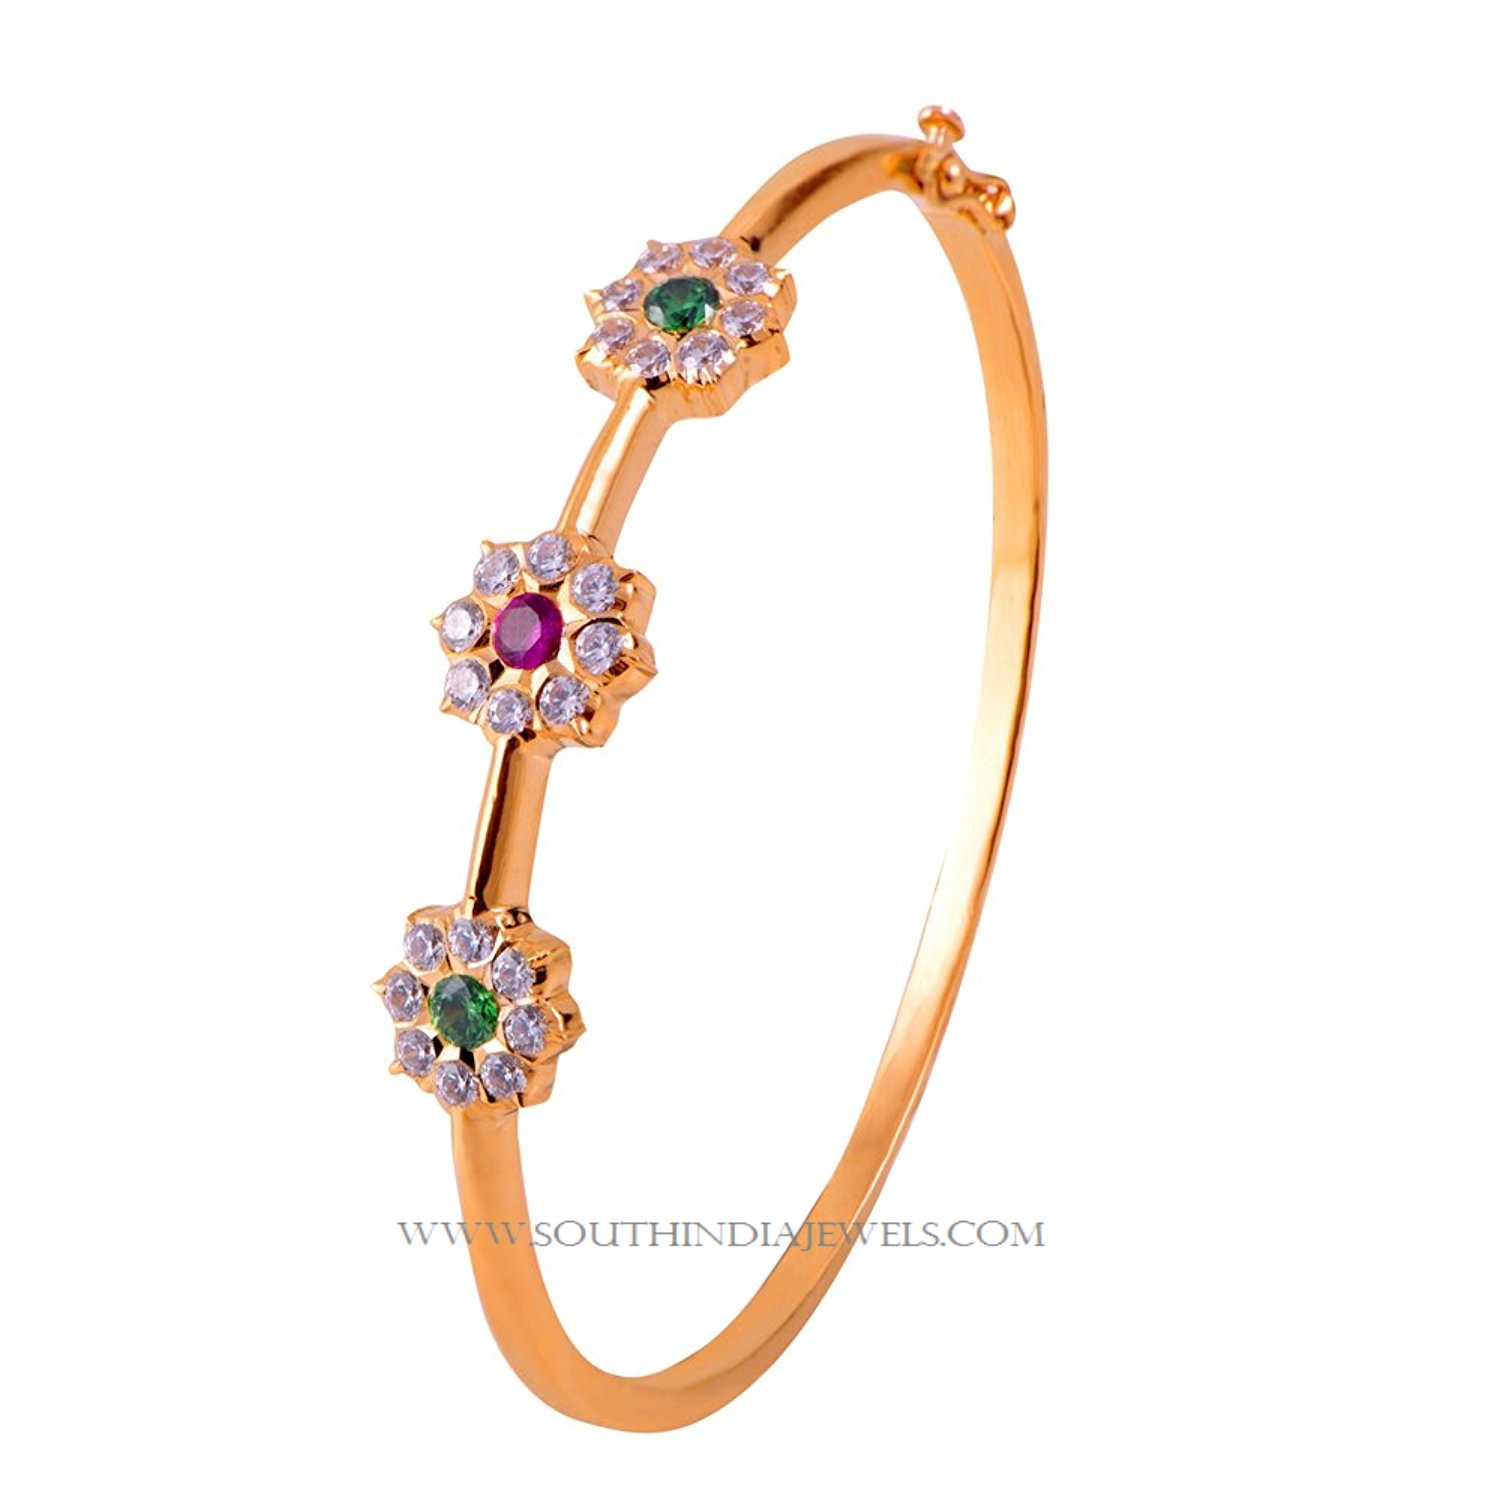 Joyalukkas Jewellery Designs With Price ~ South India Jewels